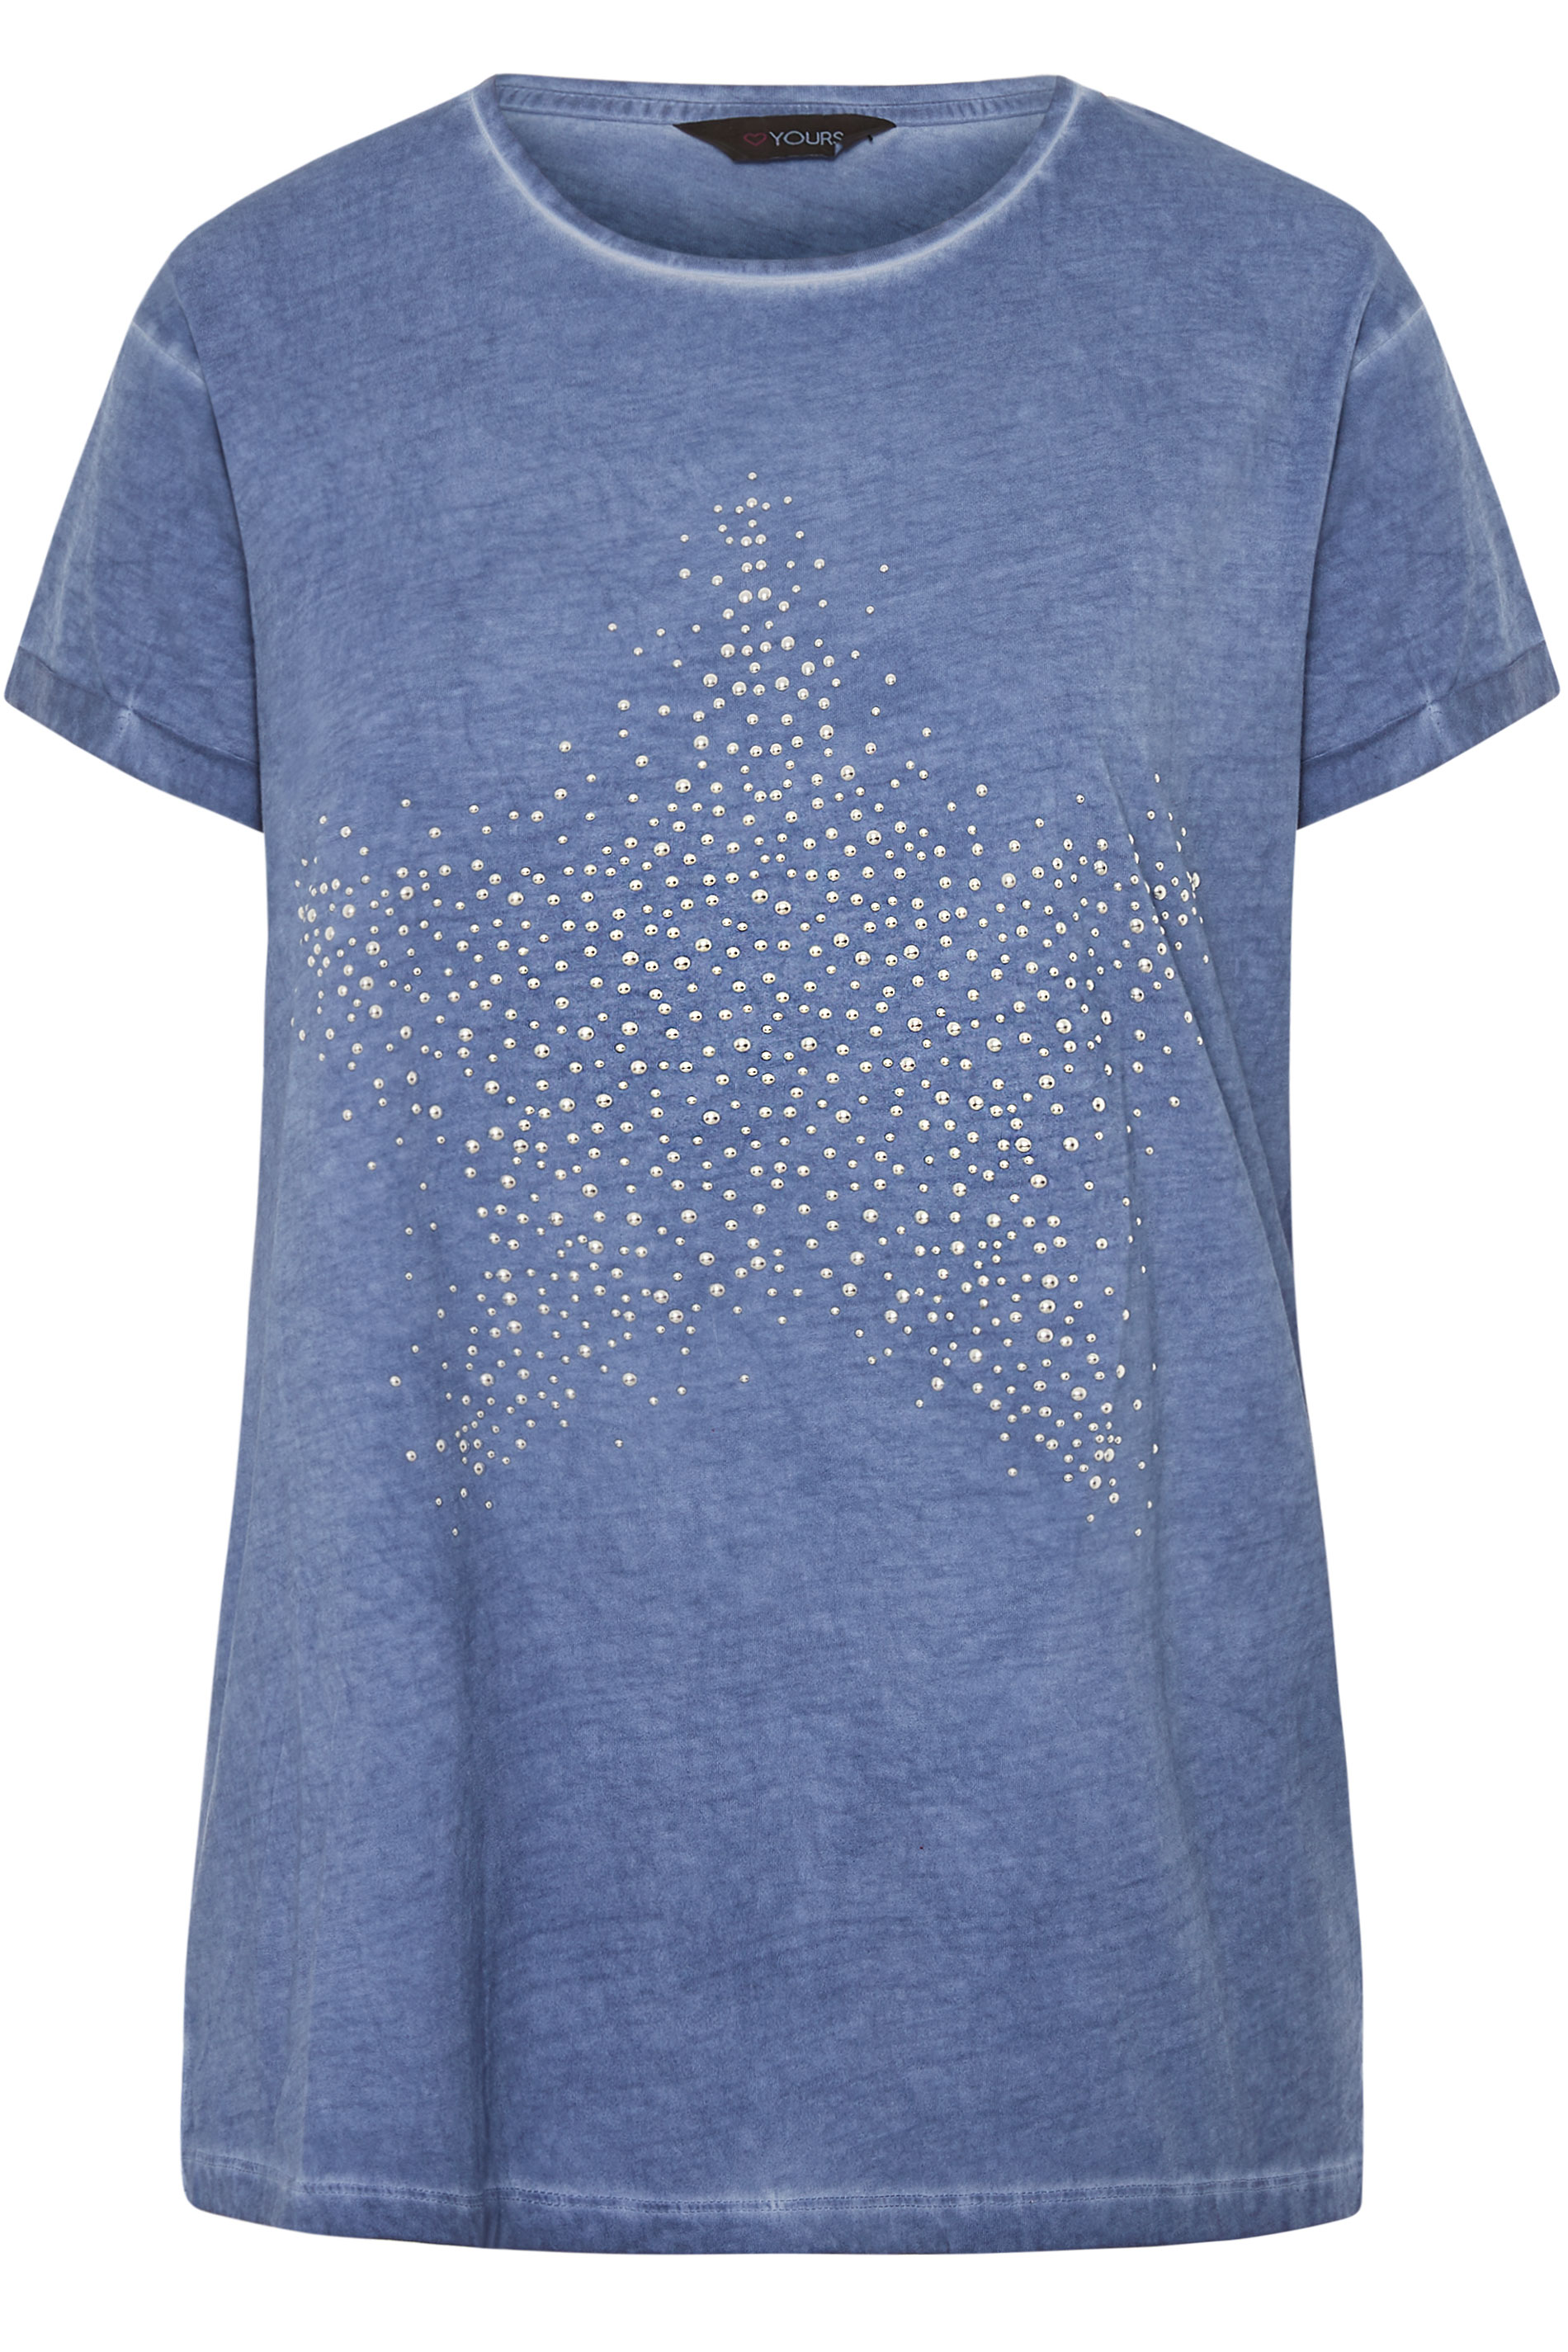 Blue Acid Wash Stud Star T-Shirt | Yours Clothing